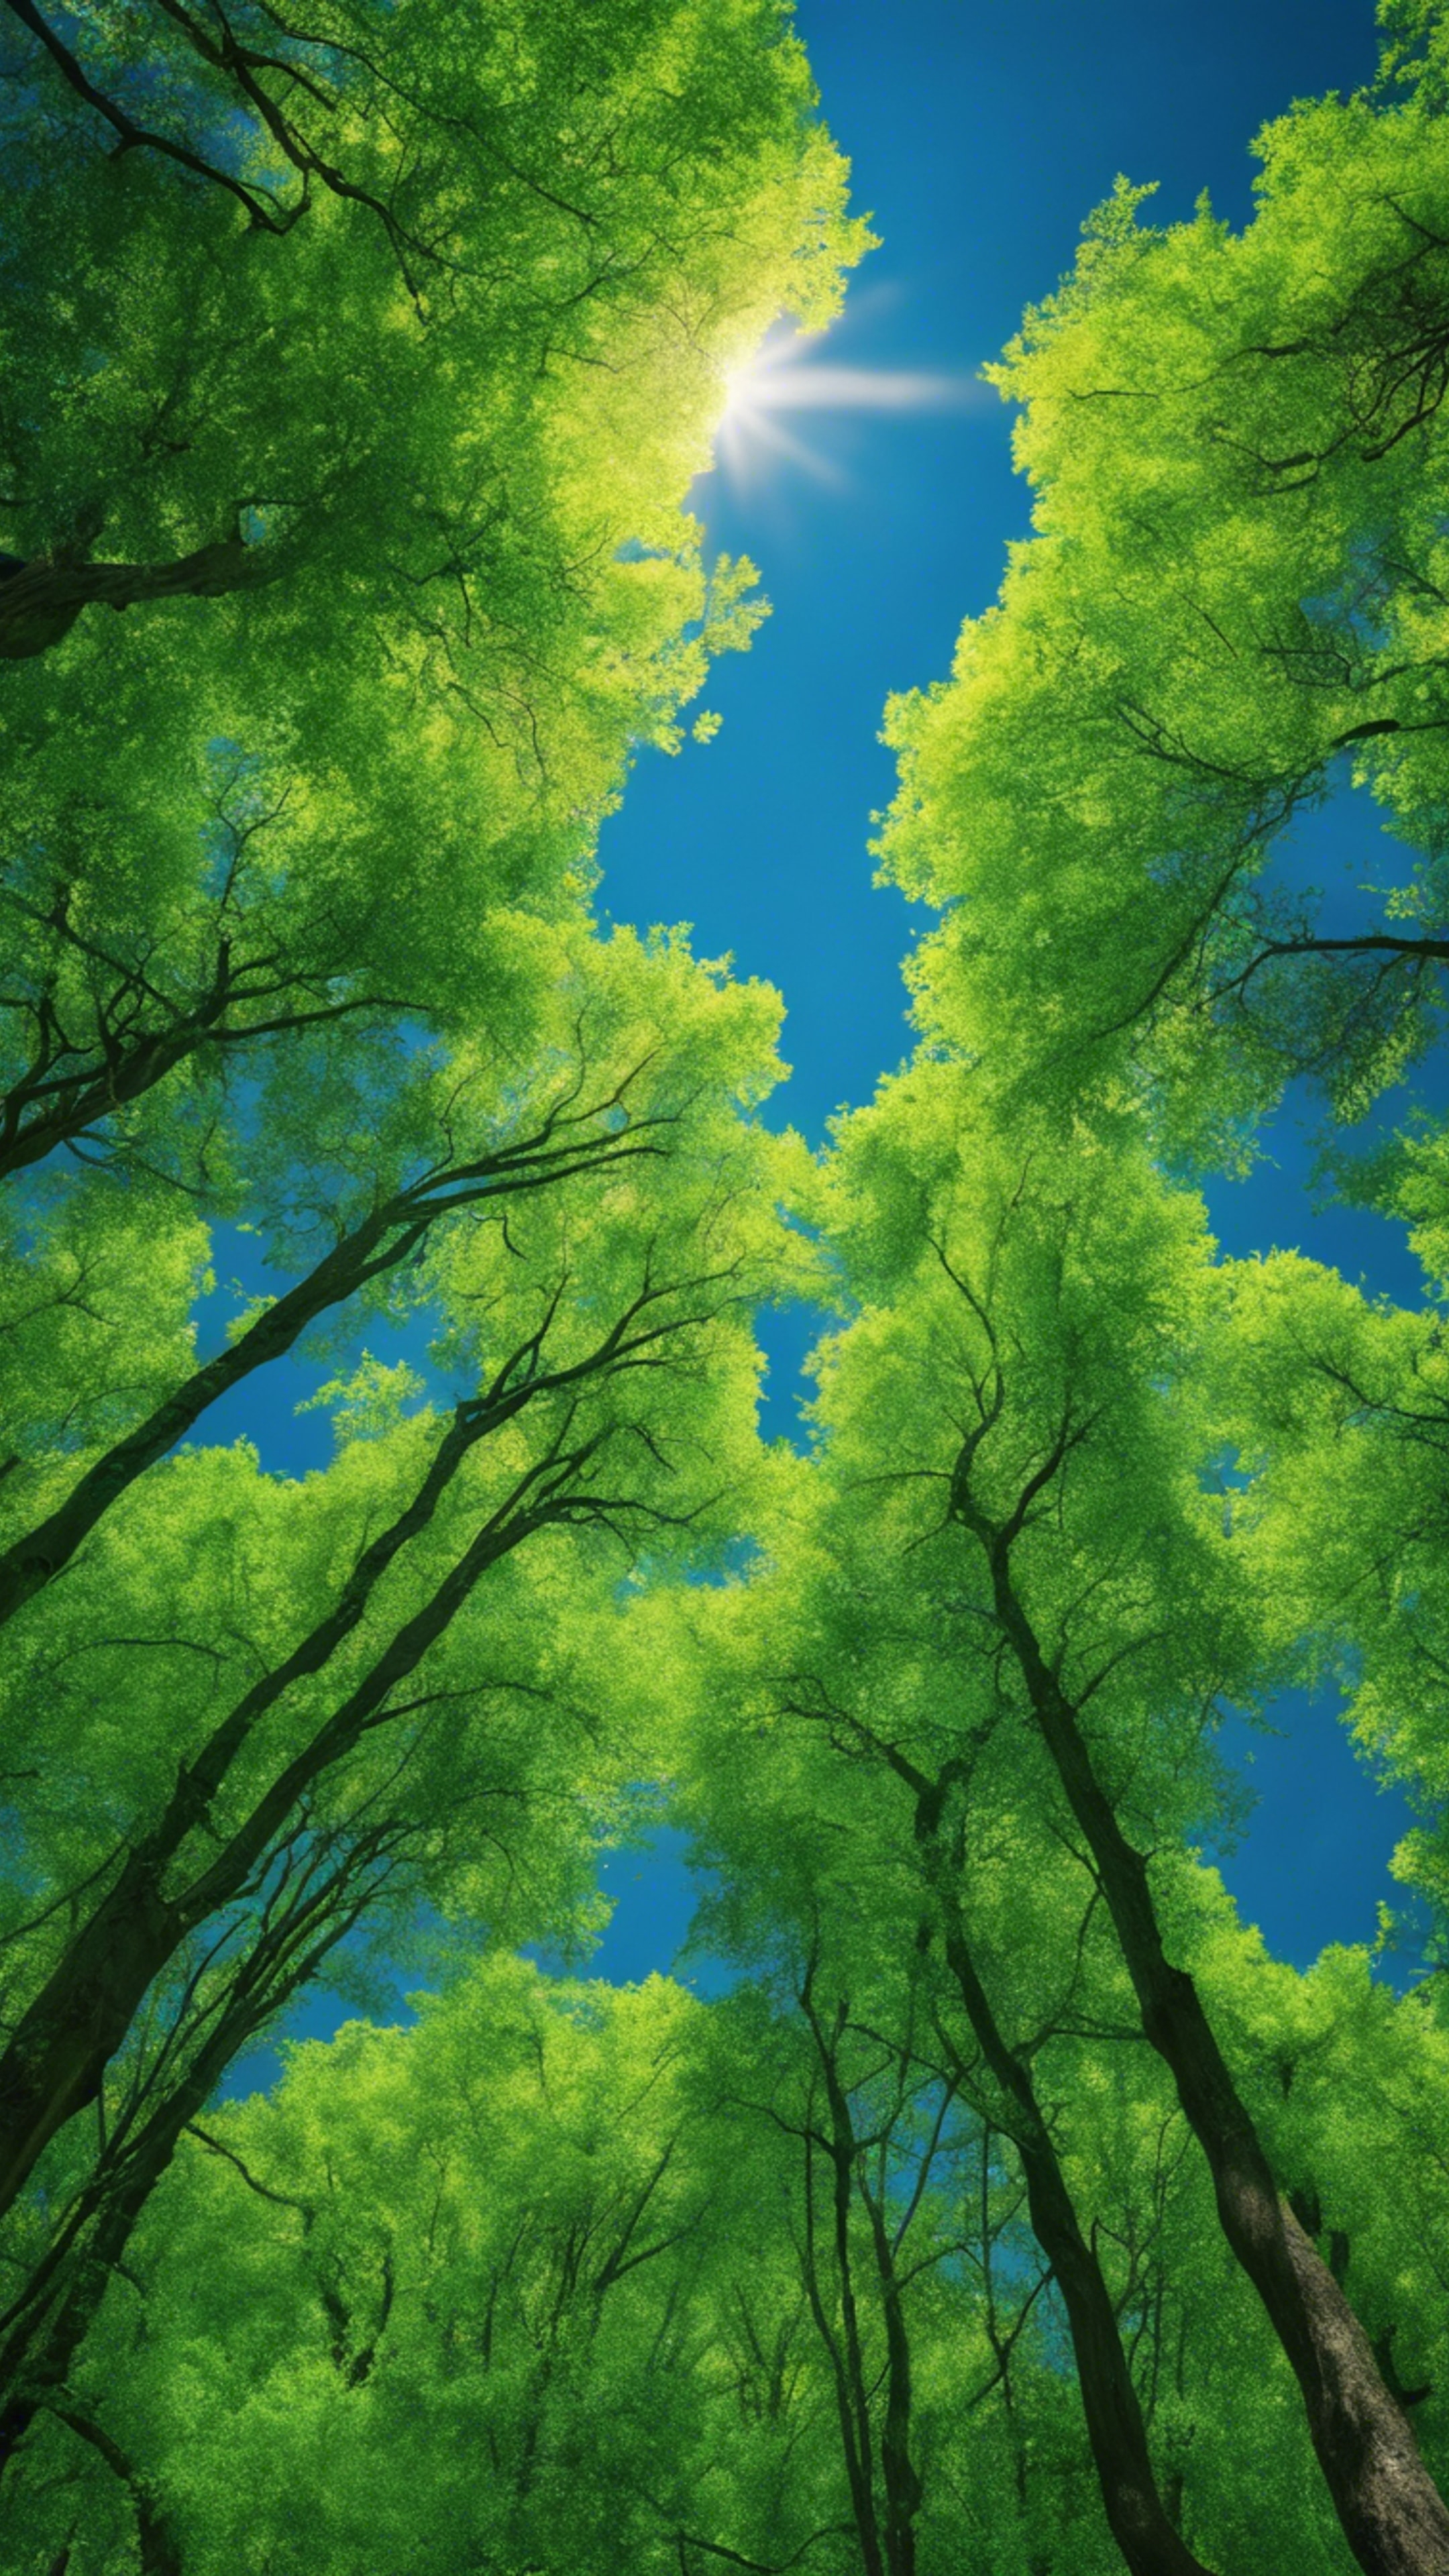 A vibrant green forest under a deep blue sky.壁紙[dfb81149561043a7a18e]